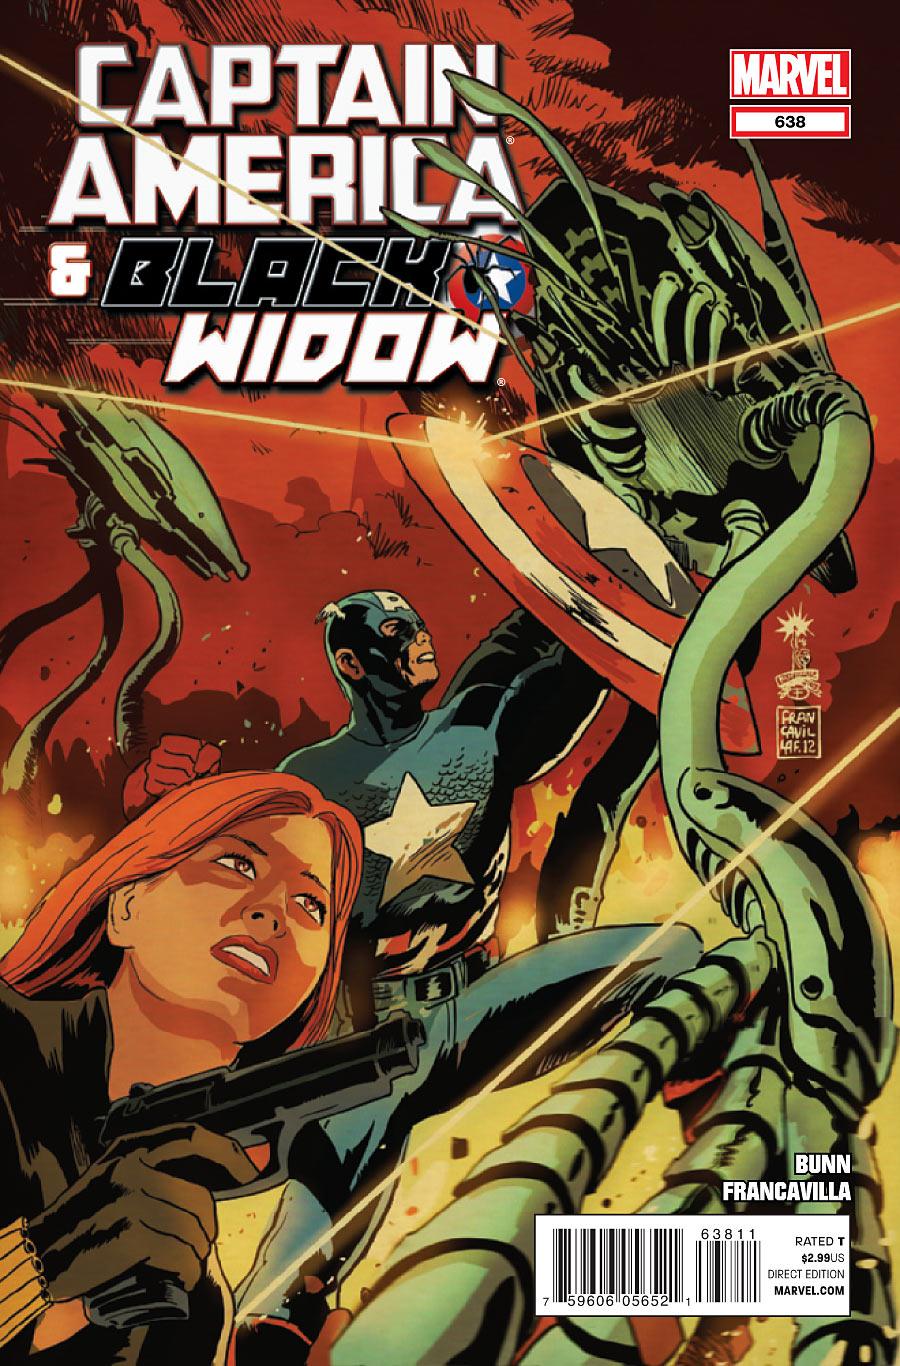 Captain America and Black Widow Vol. 1 #638